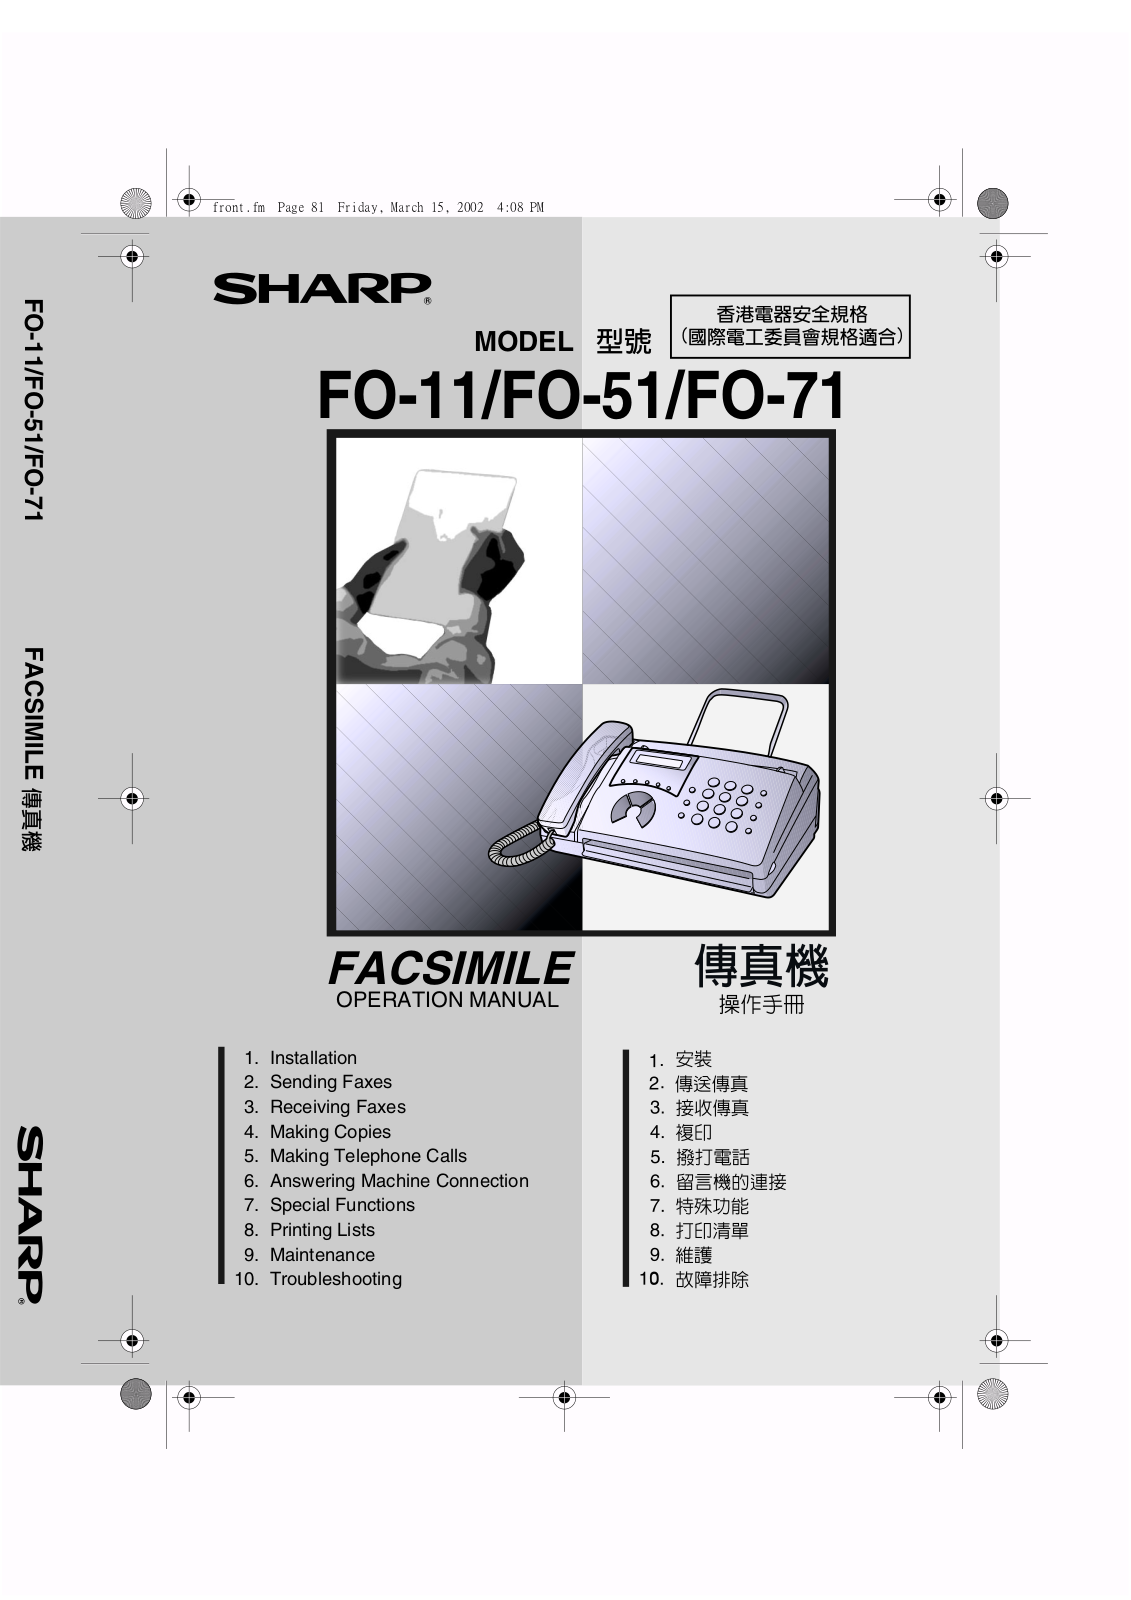 SHARP FO-11, FO-51, FO-71 User Manual